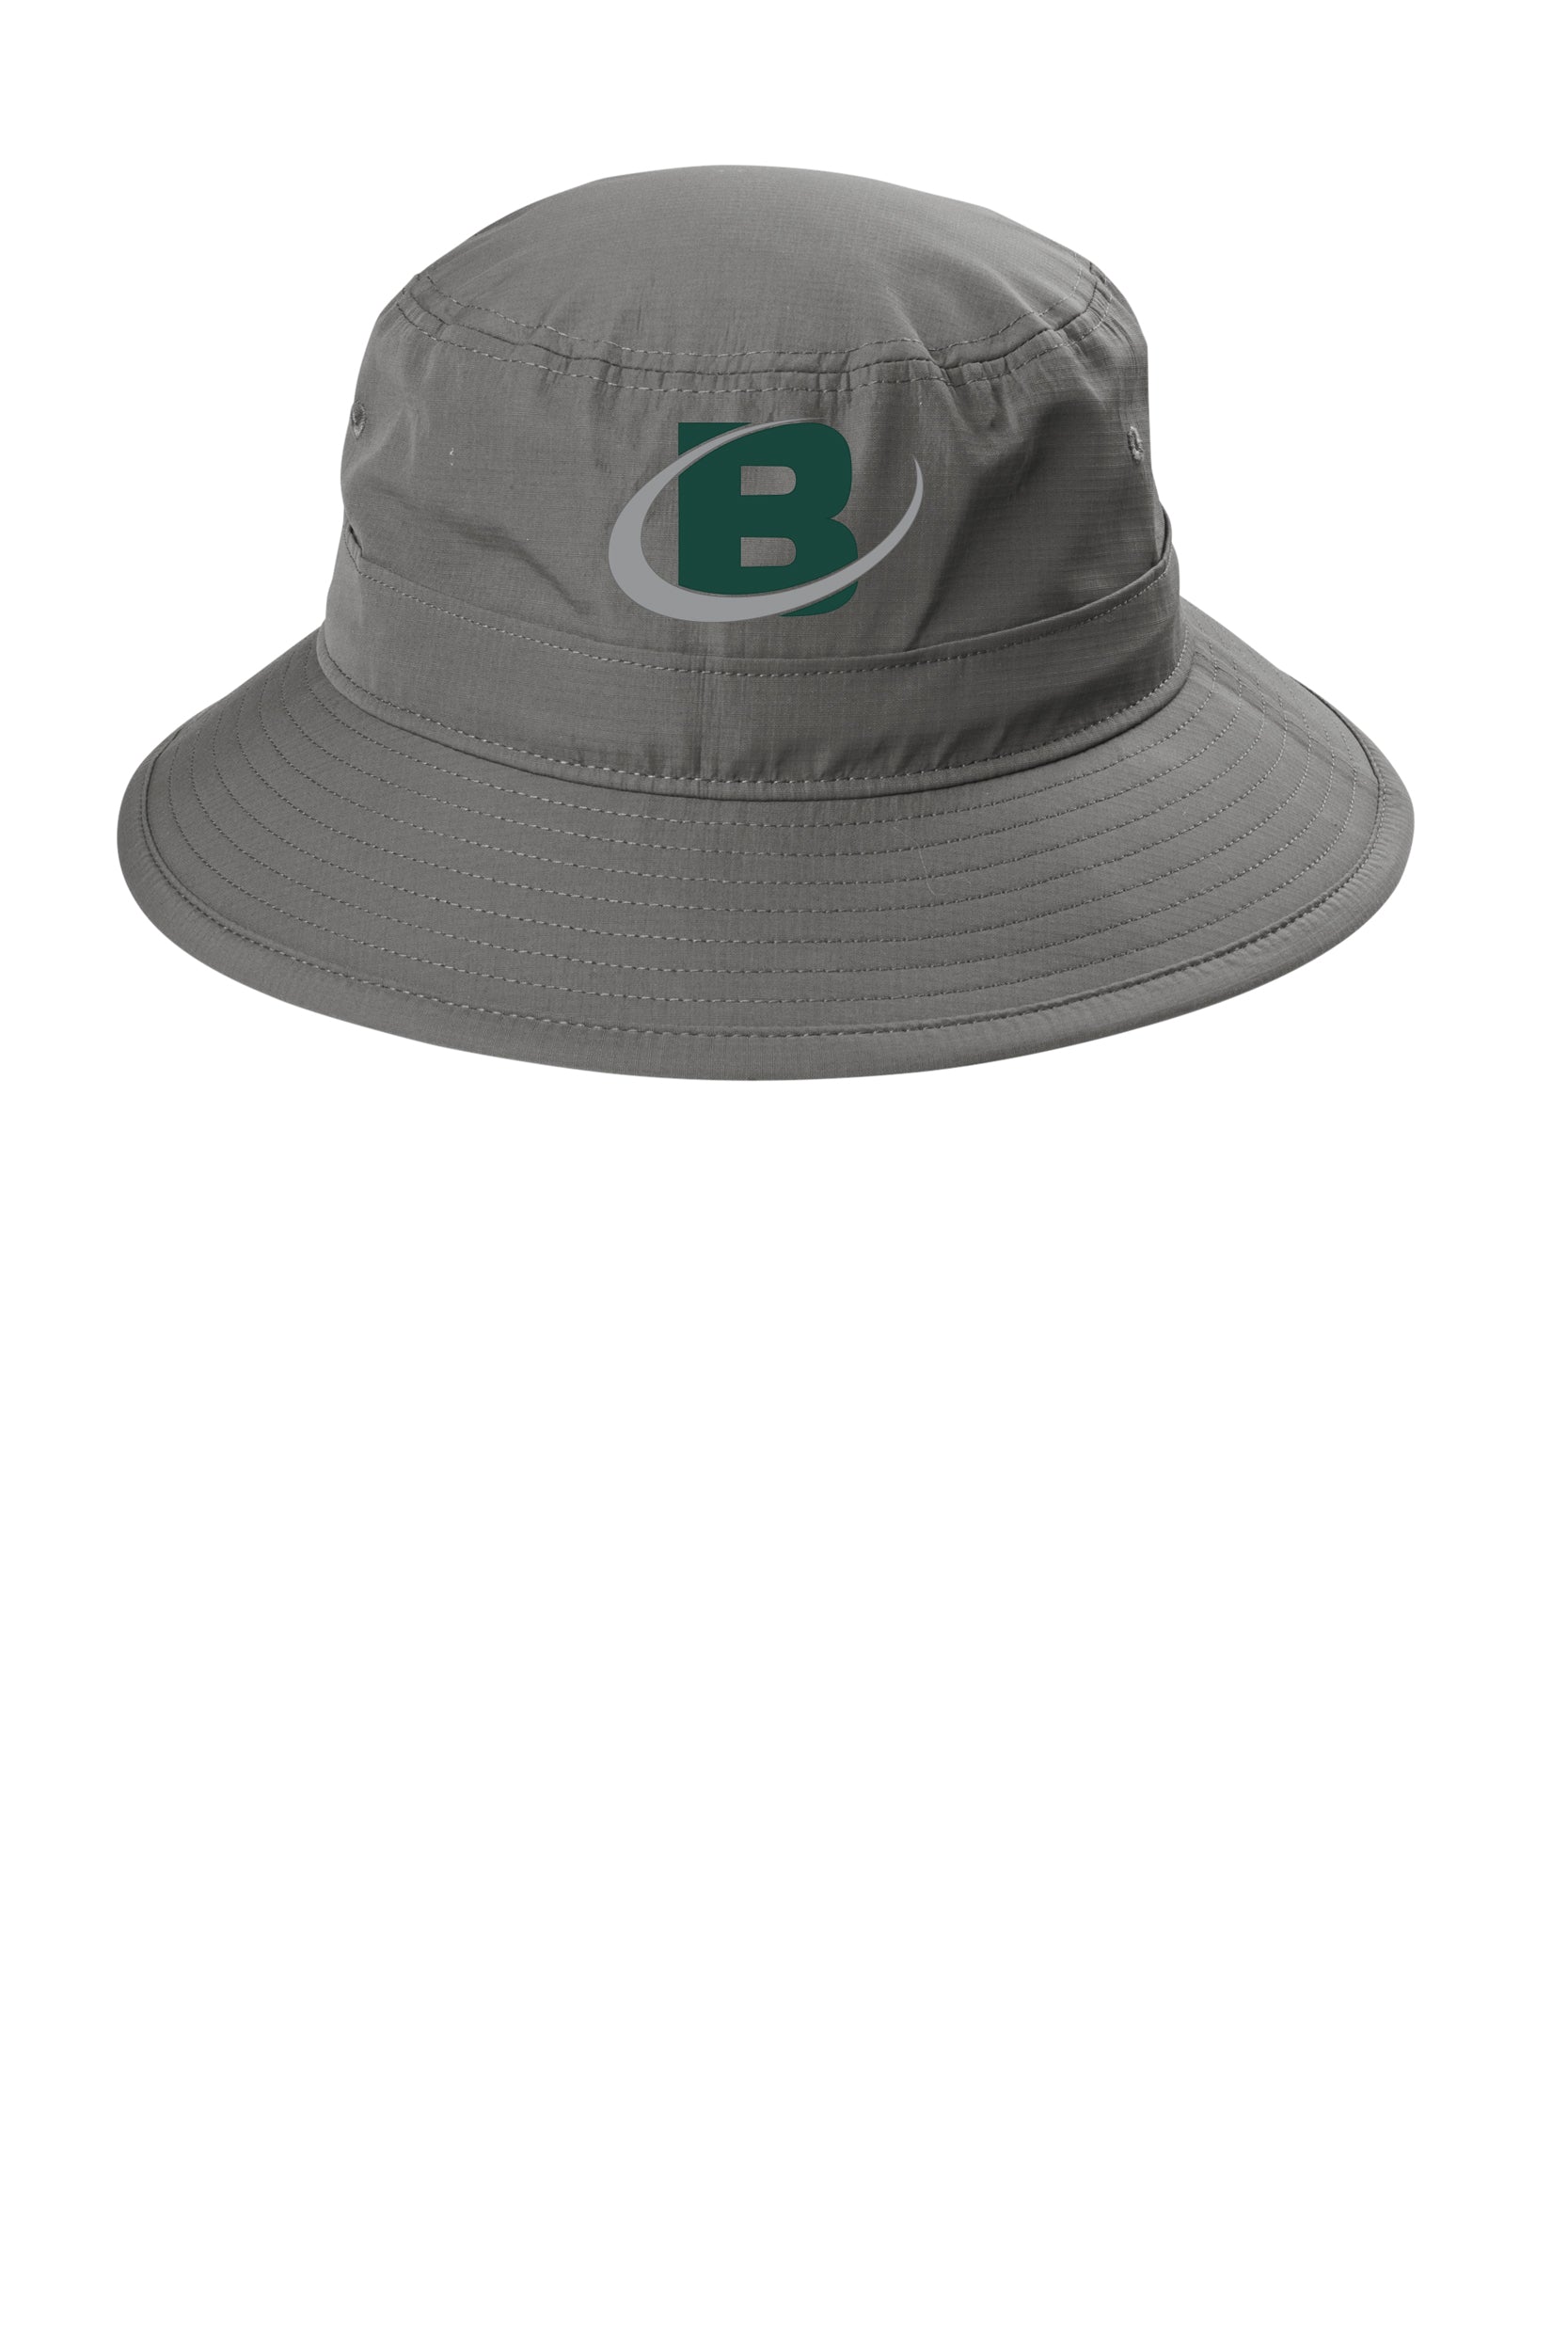 Bowman Turfgrass Professionals - Bucket Hat